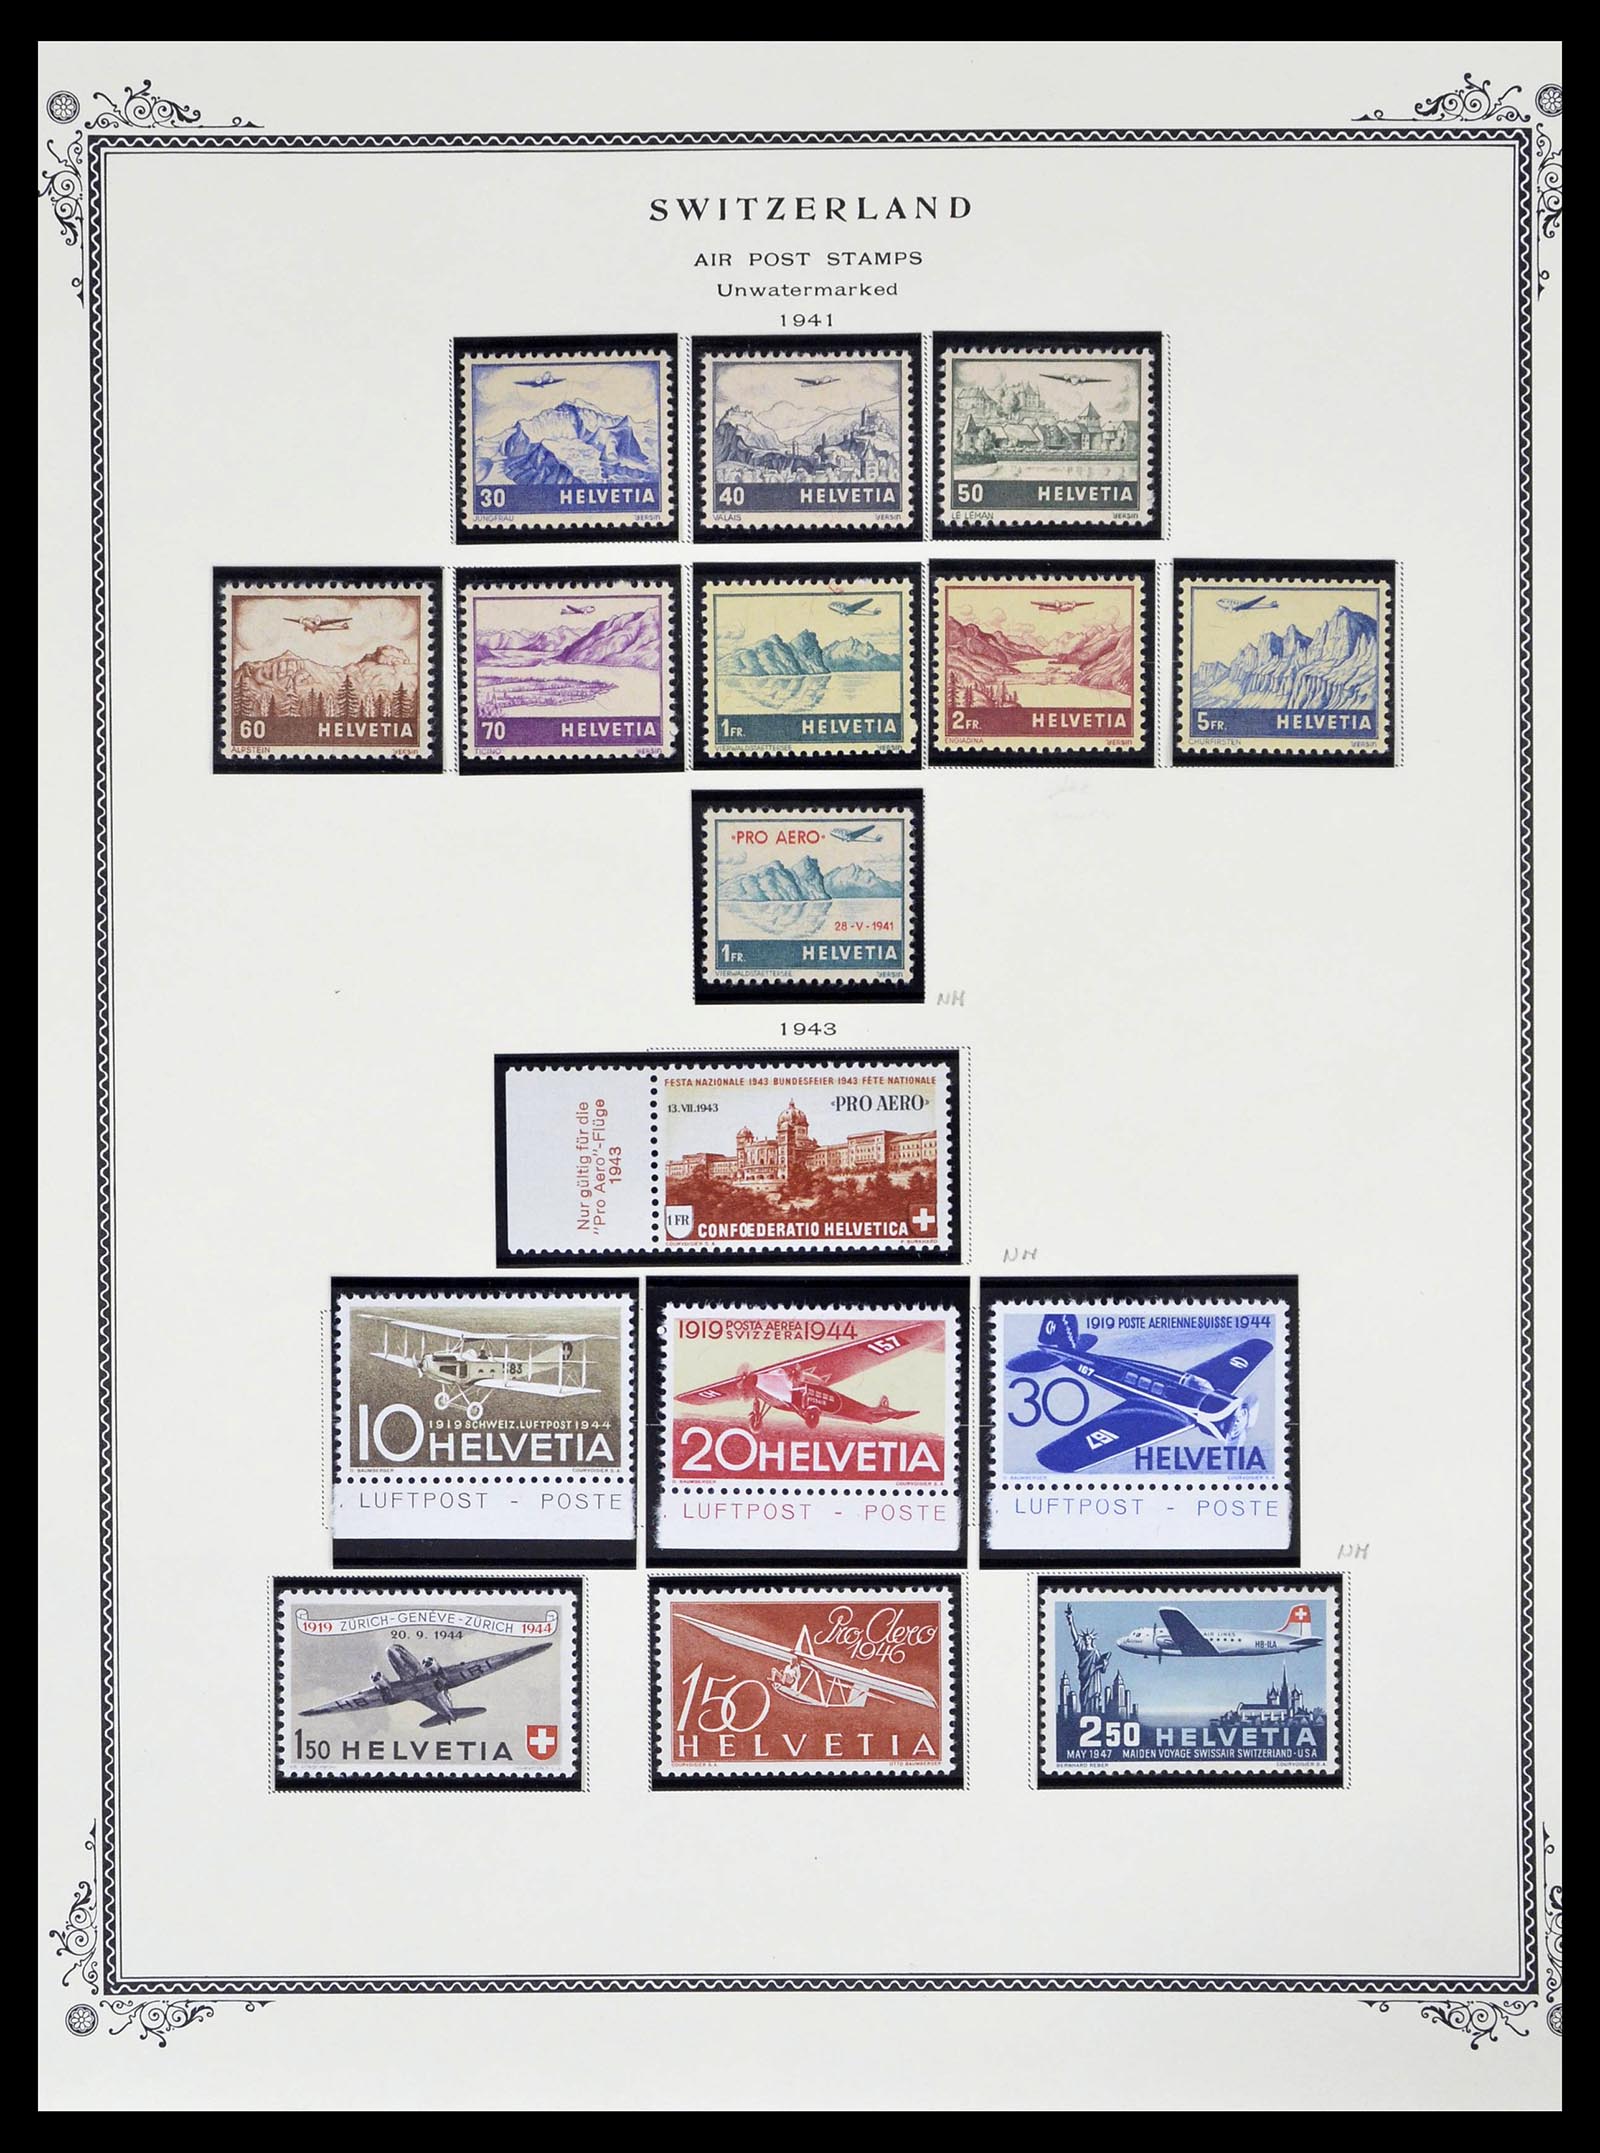 39178 0221 - Stamp collection 39178 Switzerland 1850-1989.